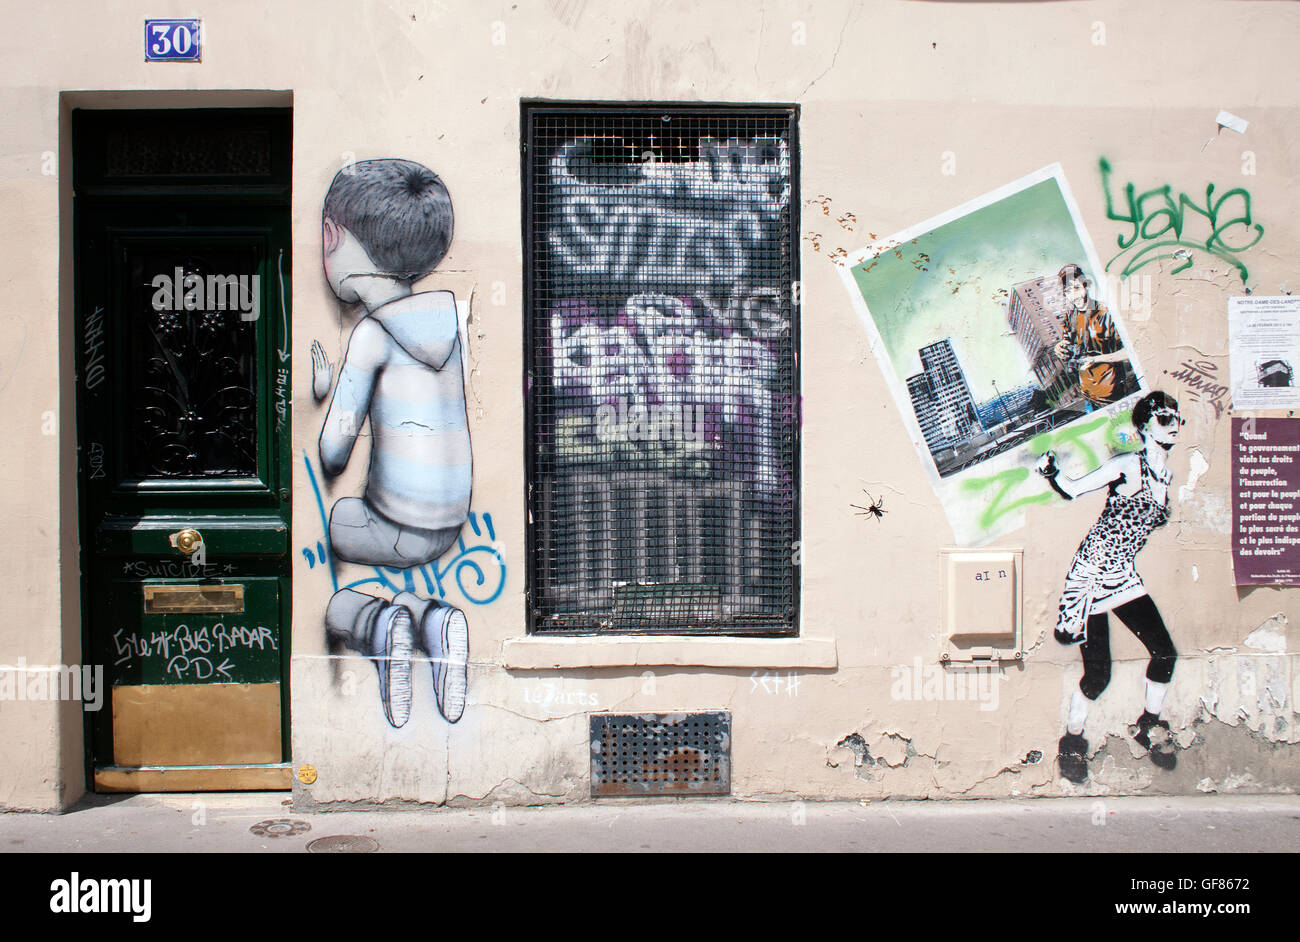 Graffiti art on a wall in Paris France Stock Photo